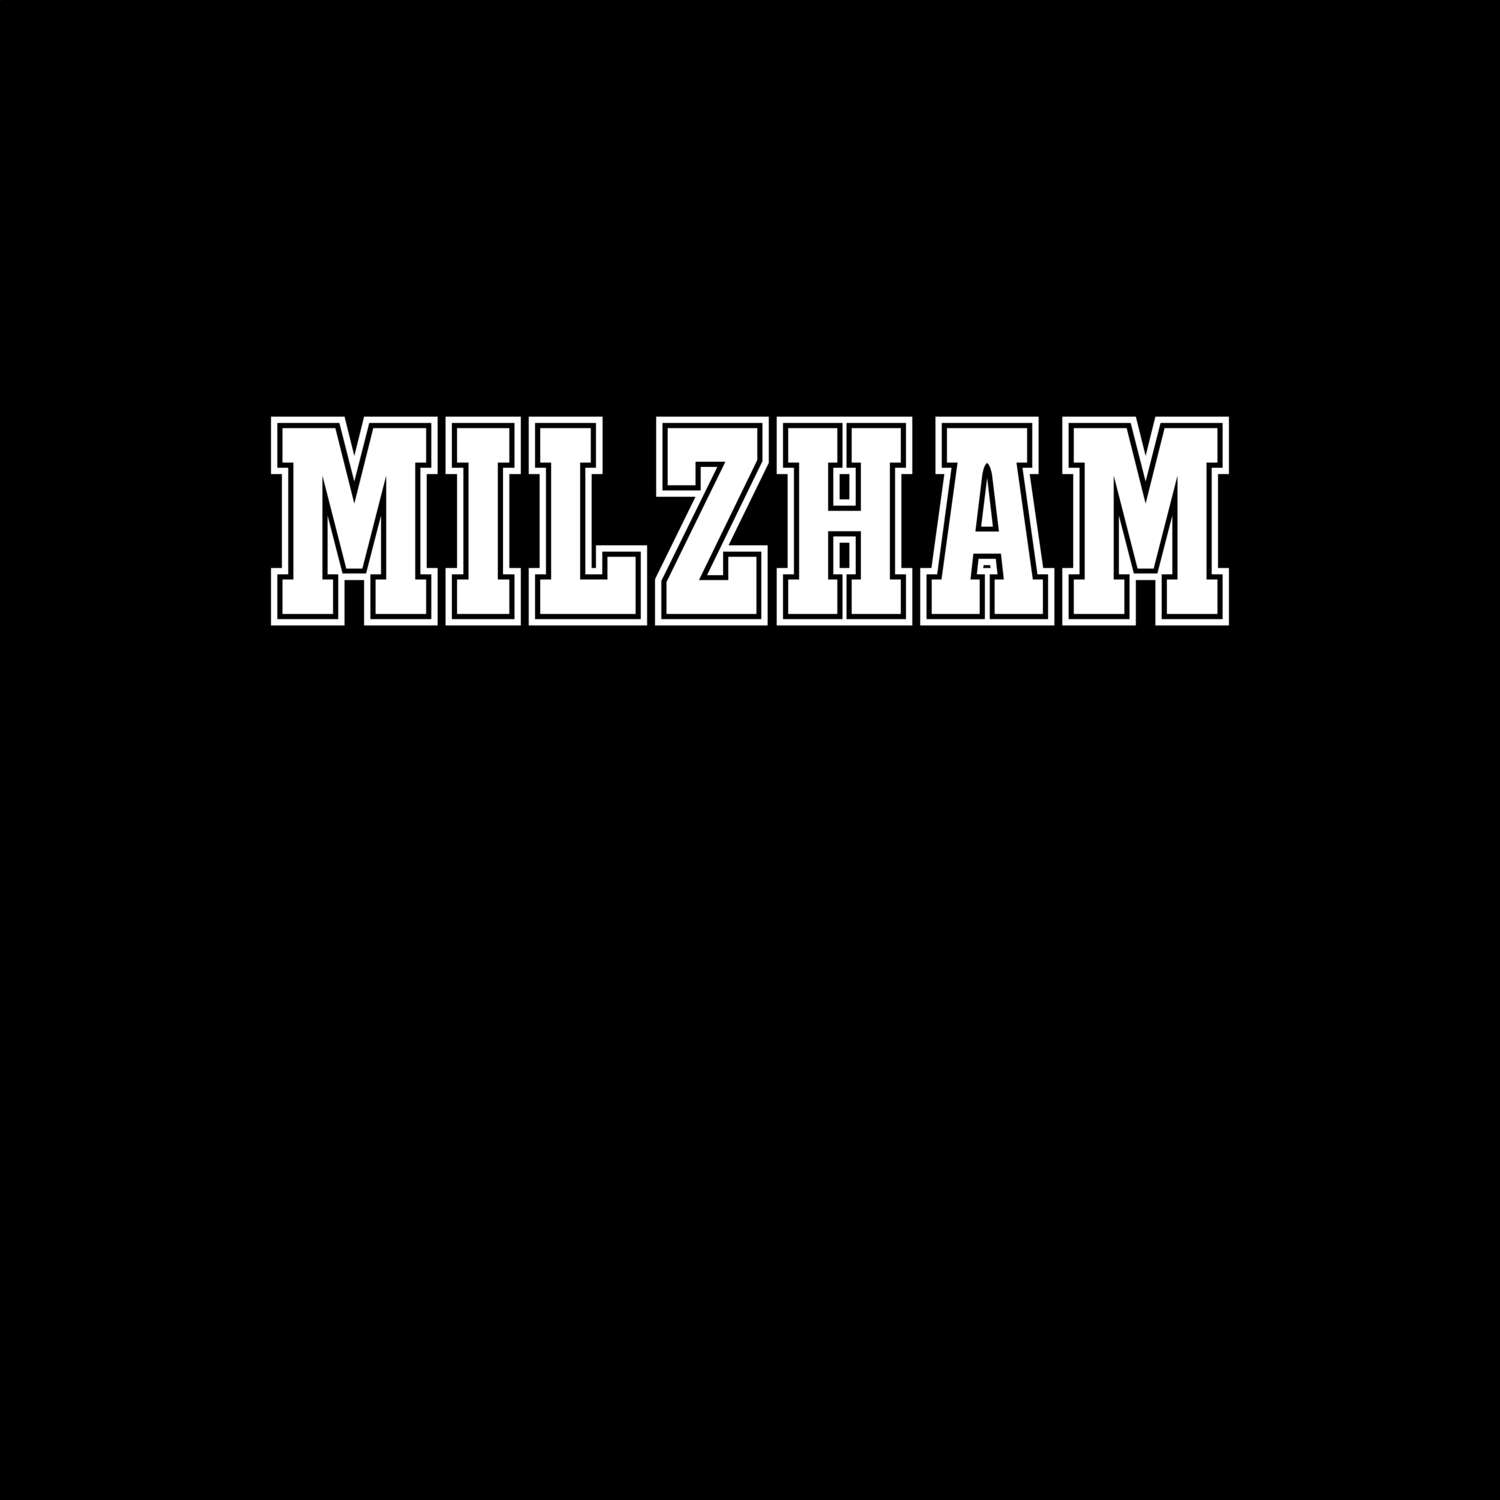 Milzham T-Shirt »Classic«